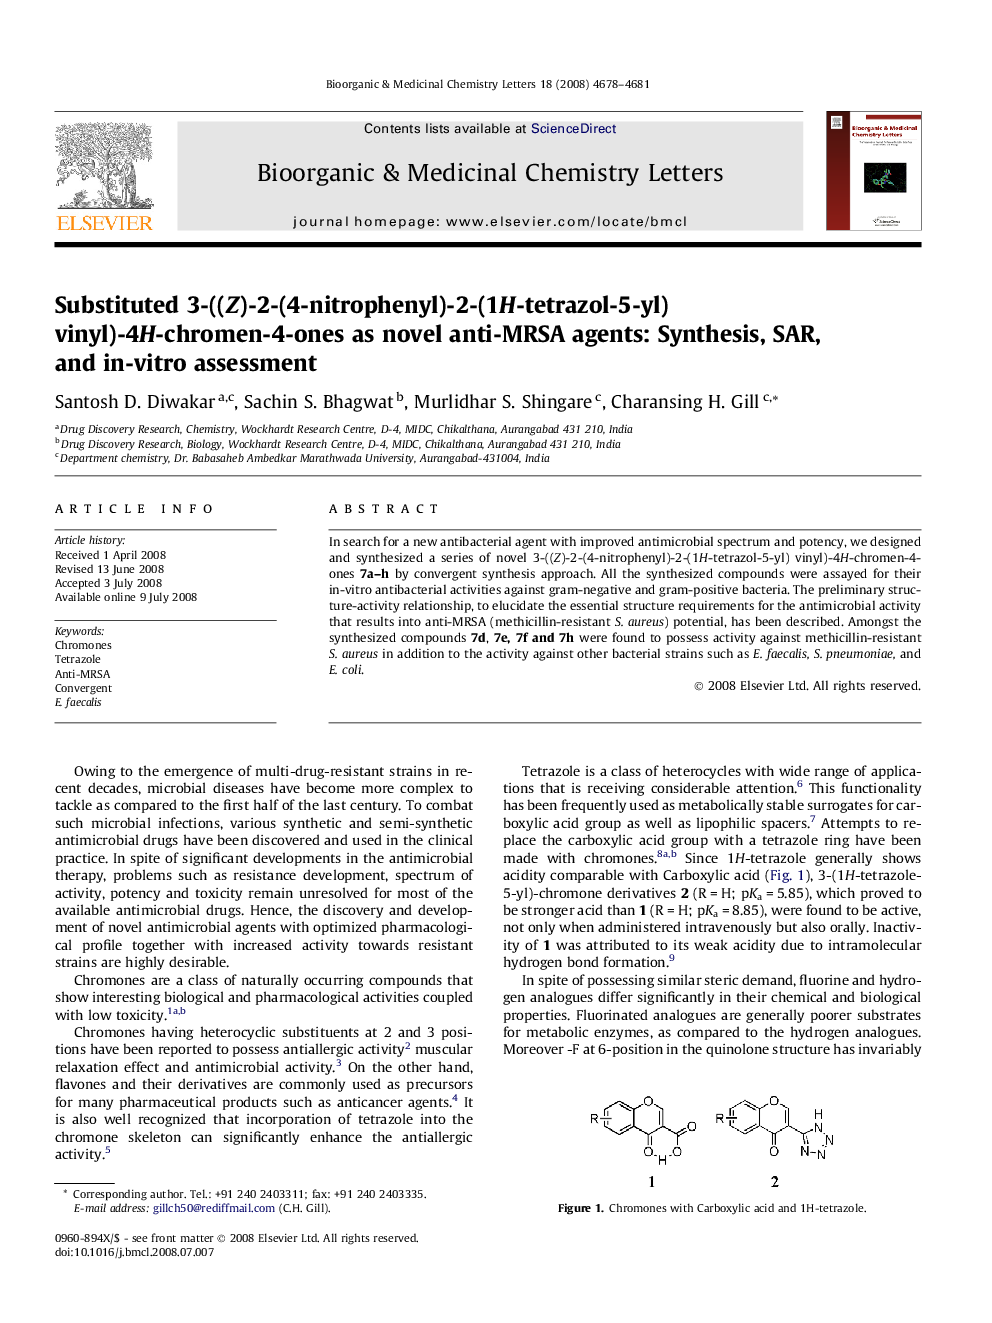 Substituted 3-((Z)-2-(4-nitrophenyl)-2-(1H-tetrazol-5-yl) vinyl)-4H-chromen-4-ones as novel anti-MRSA agents: Synthesis, SAR, and in-vitro assessment